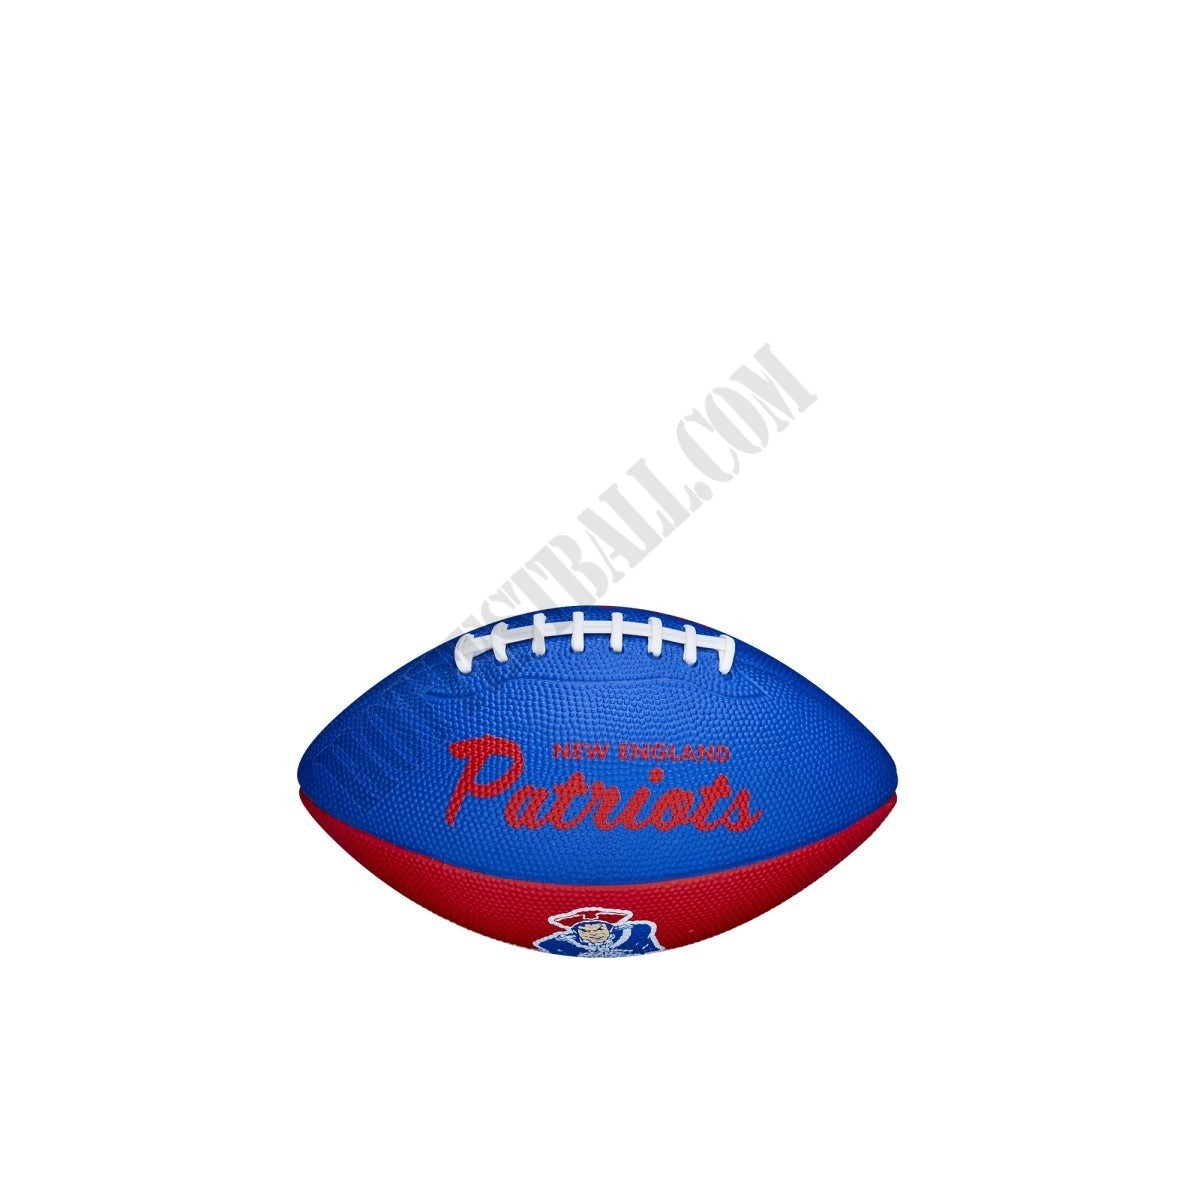 NFL Retro Mini Football - New England Patriots ● Wilson Promotions - NFL Retro Mini Football - New England Patriots ● Wilson Promotions